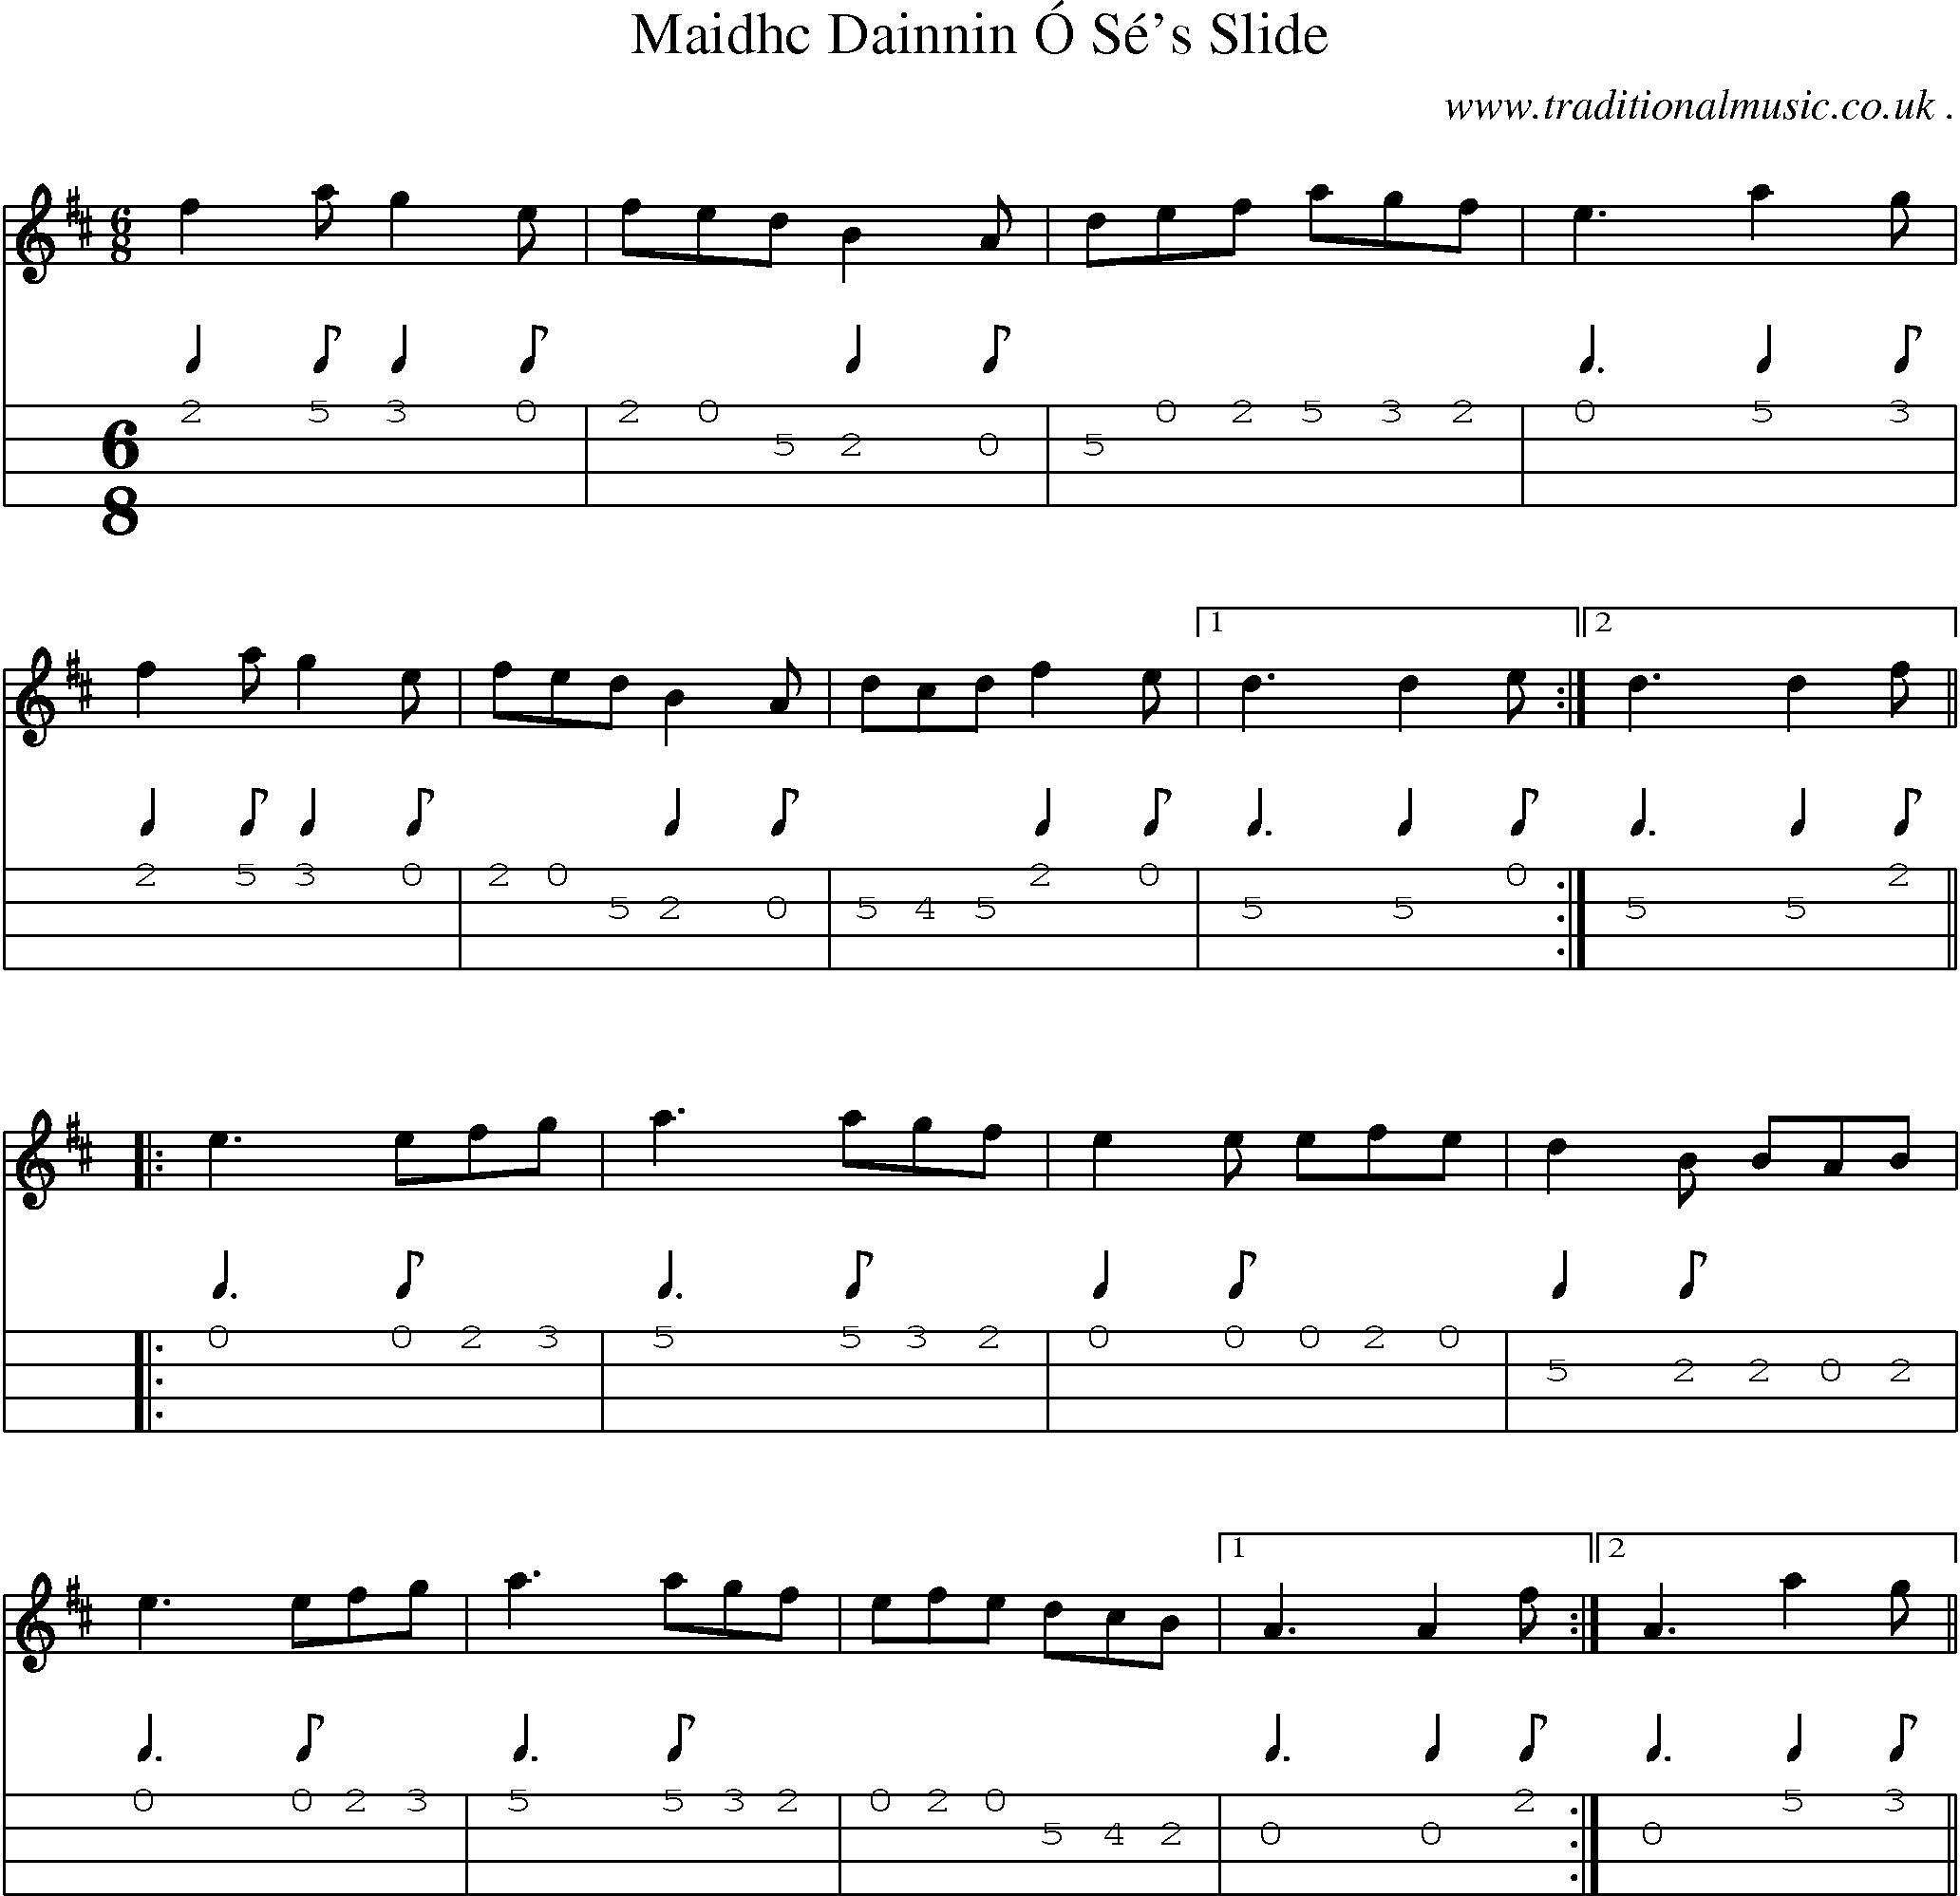 Sheet-Music and Mandolin Tabs for Maidhc Dainnin O Ses Slide